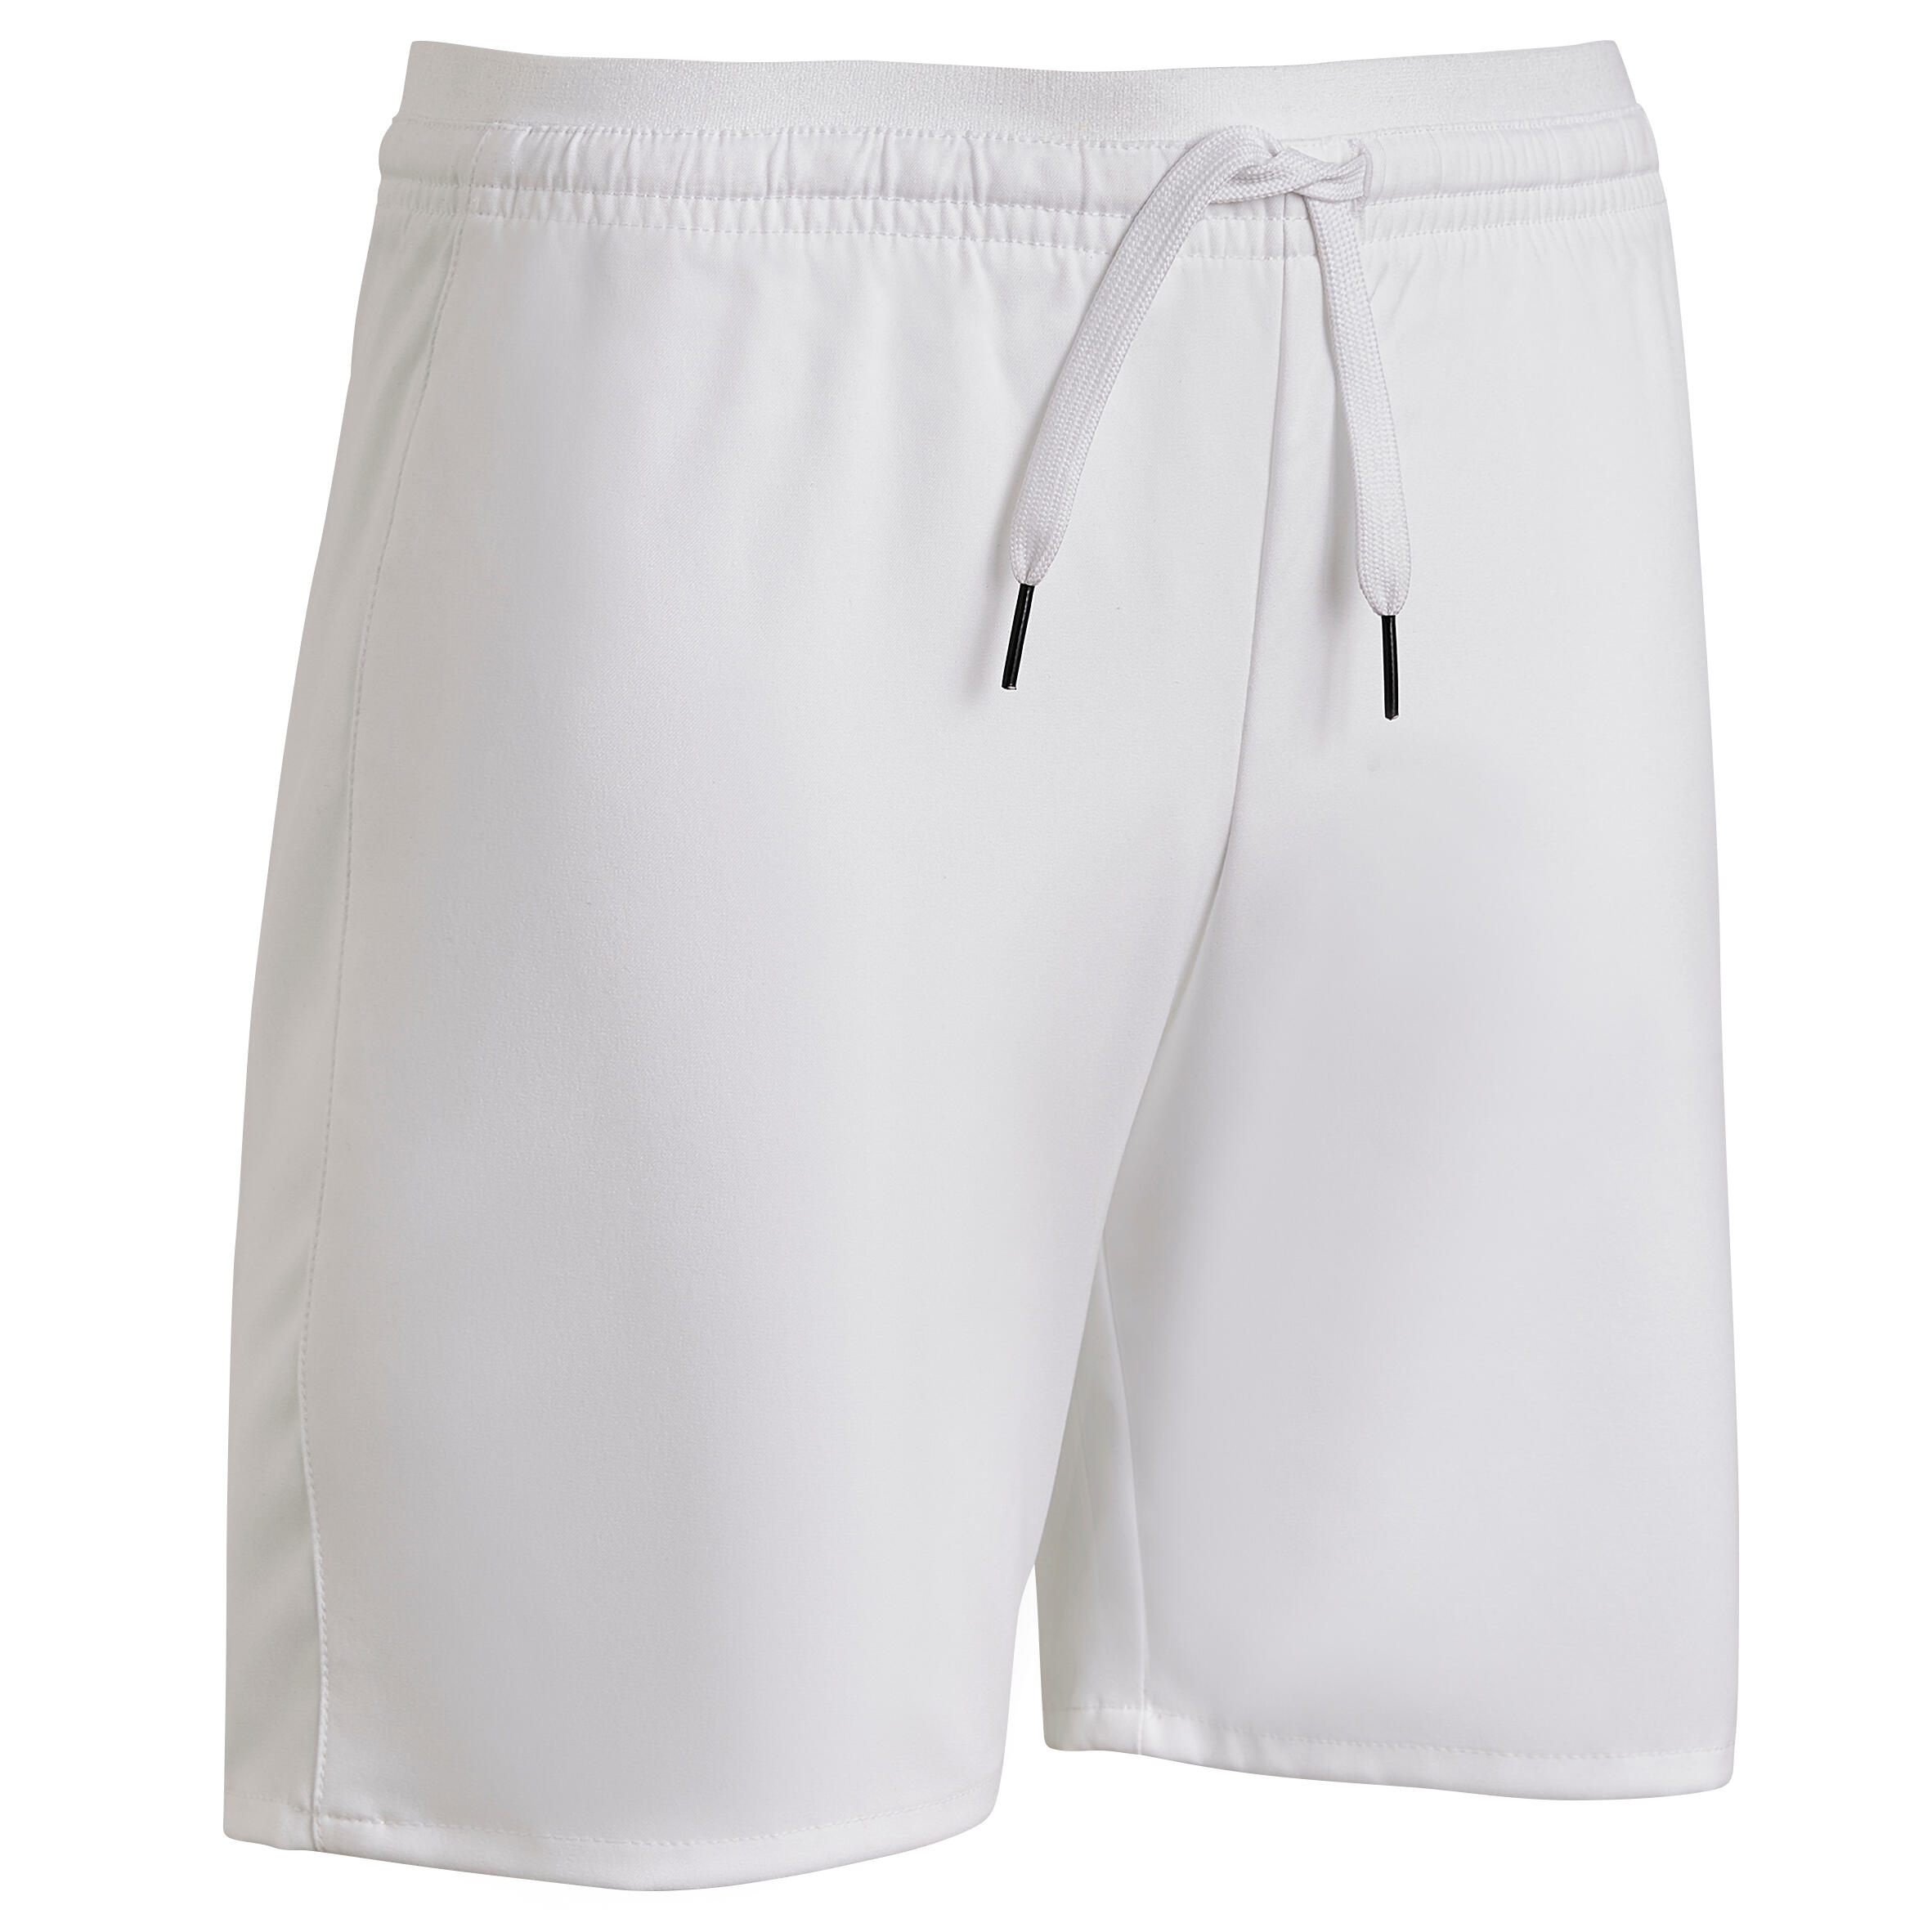 decathlon football shorts